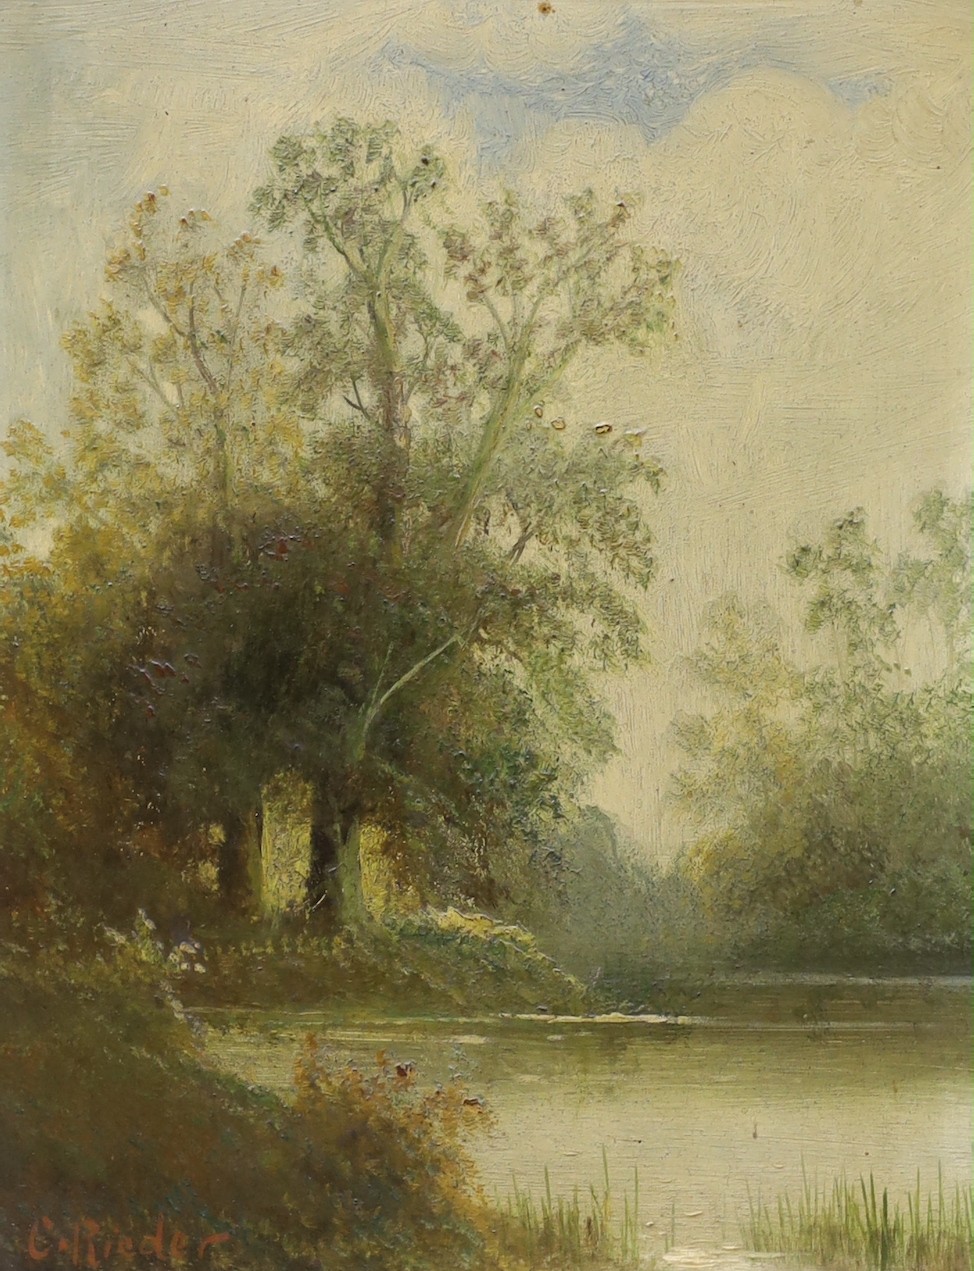 C. Rieder (c.1900), pair of oils on panel, River landscapes, signed, 25 x 20cm